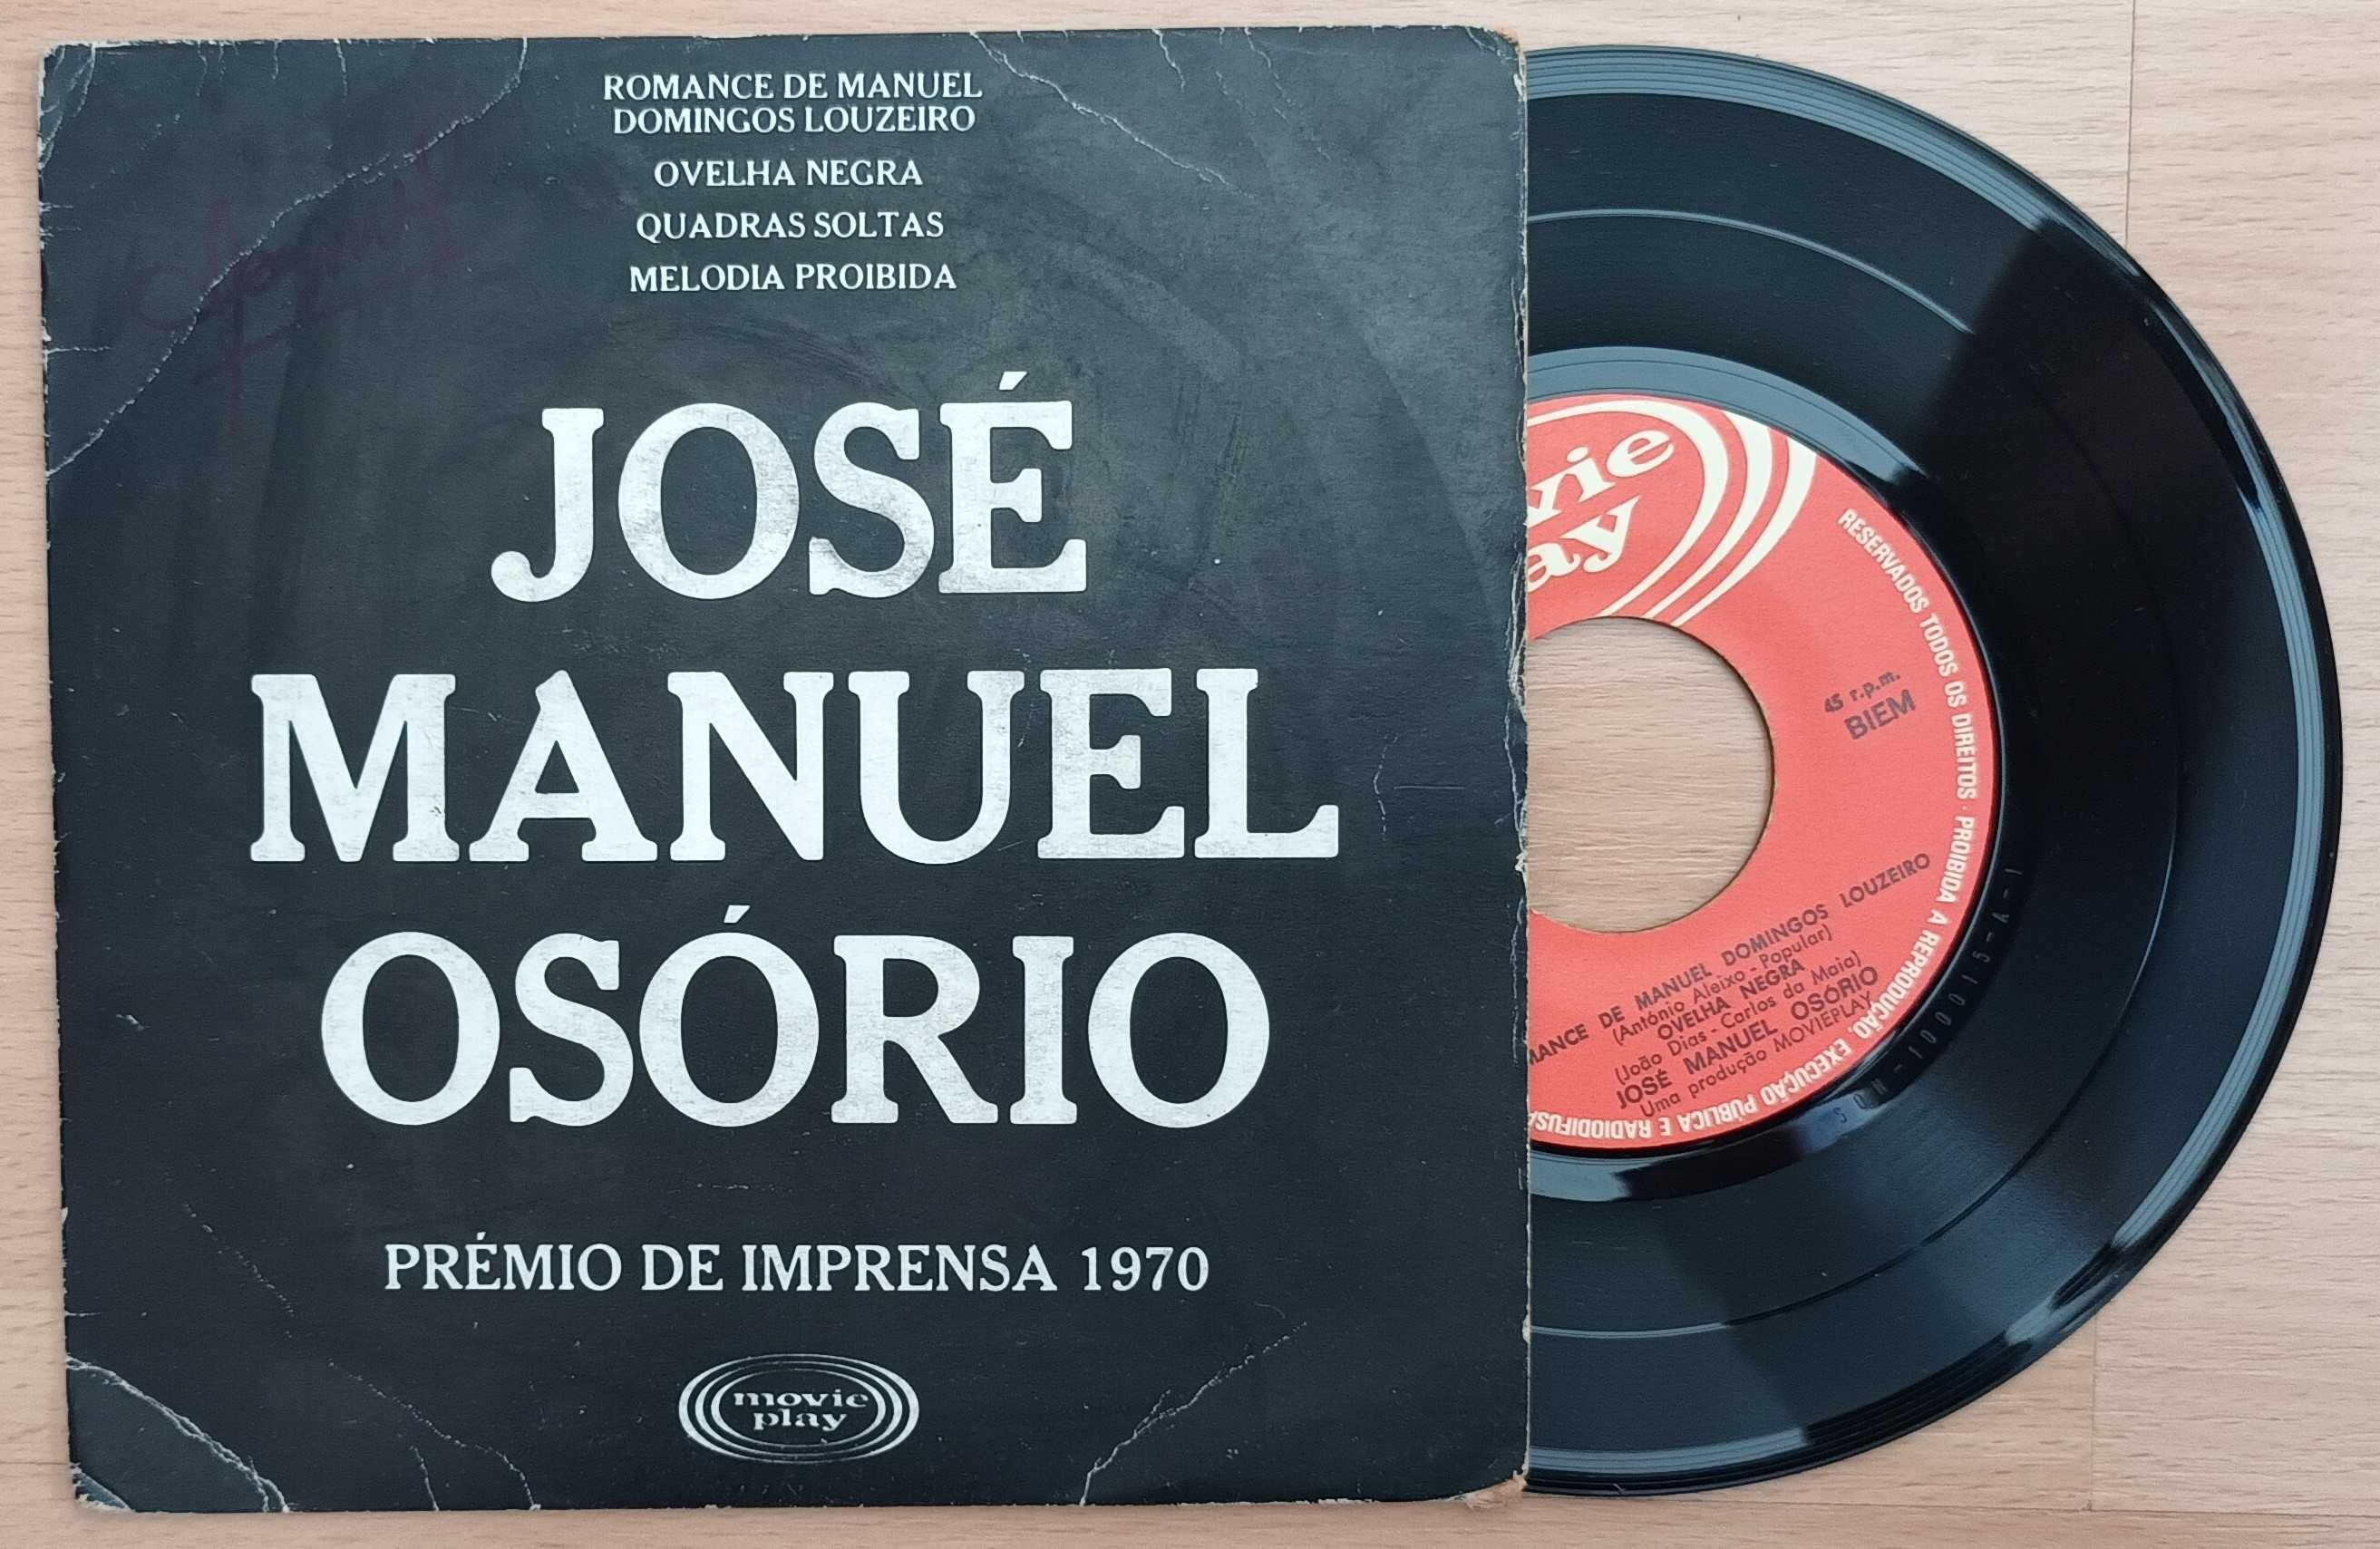 Jose Manuel Osorio - Romance de Manuel Domingos Louzeiro  1970 EP